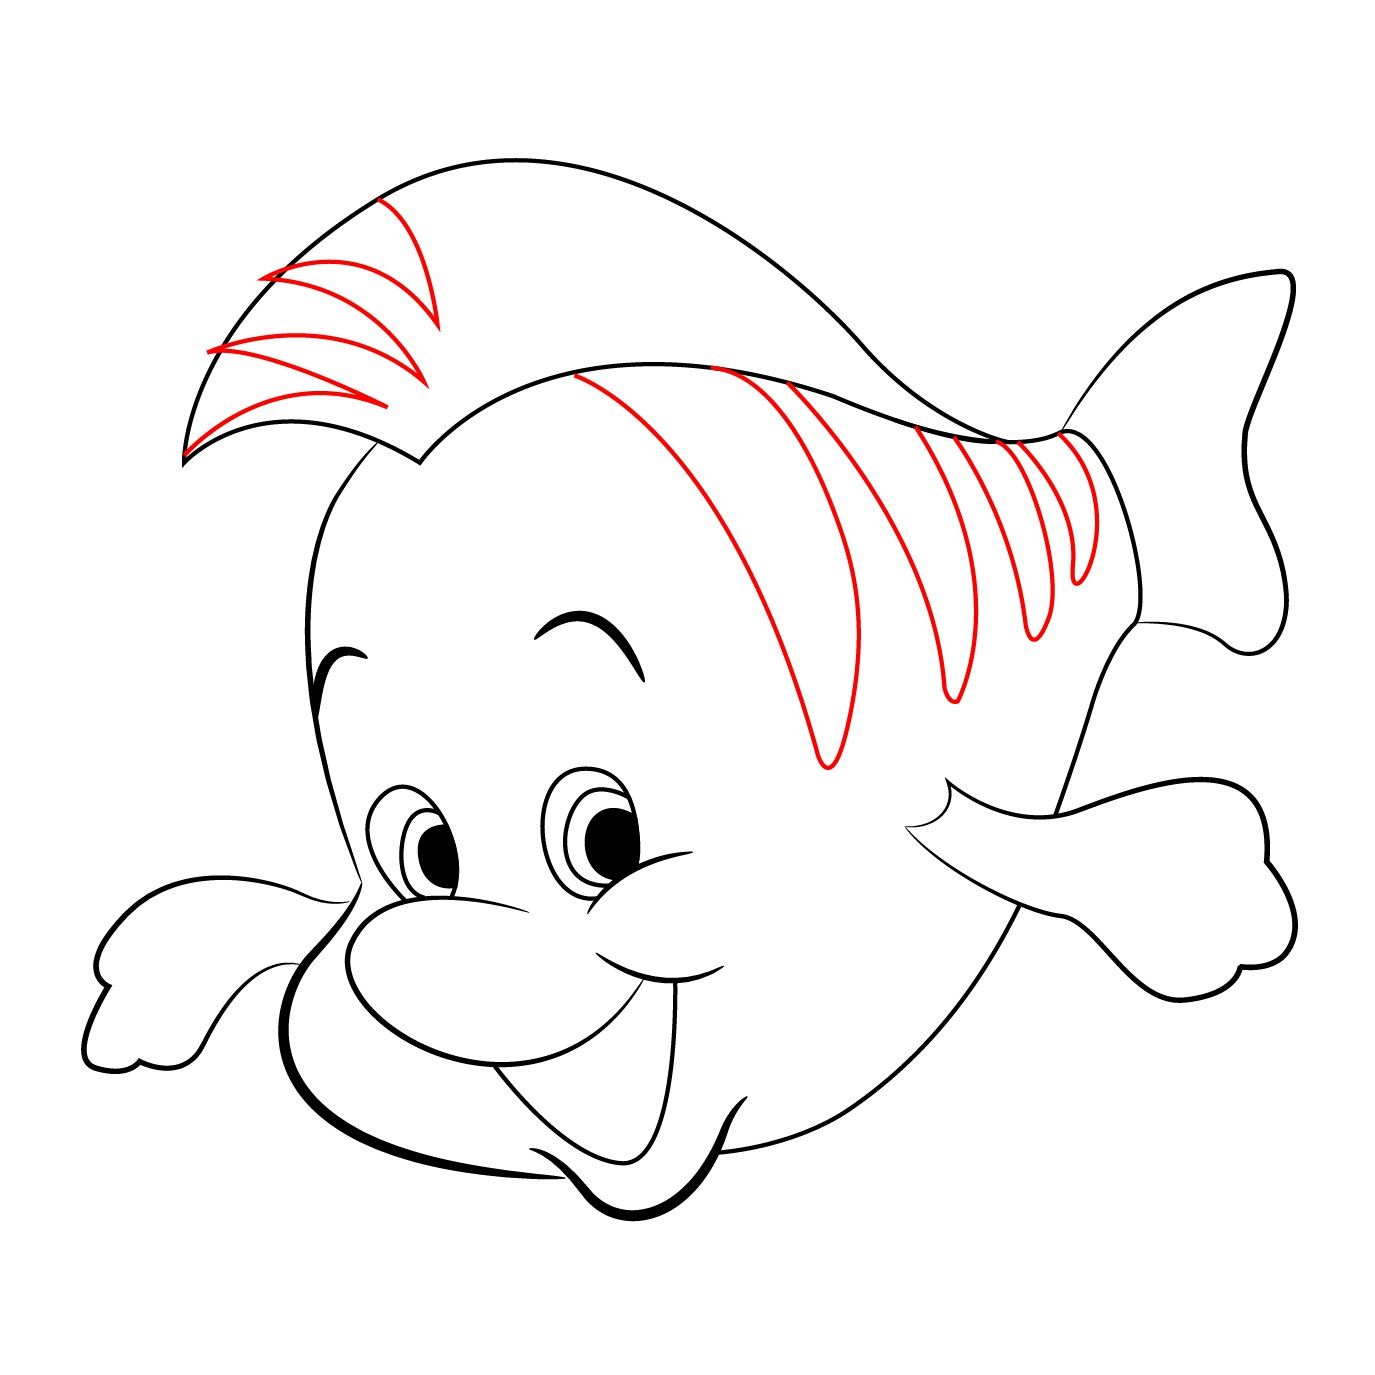 Flounder Flatfish Sketch For Seafood Design Royalty Free SVG, Cliparts,  Vectors, And Stock Illustration. Image 74733732.